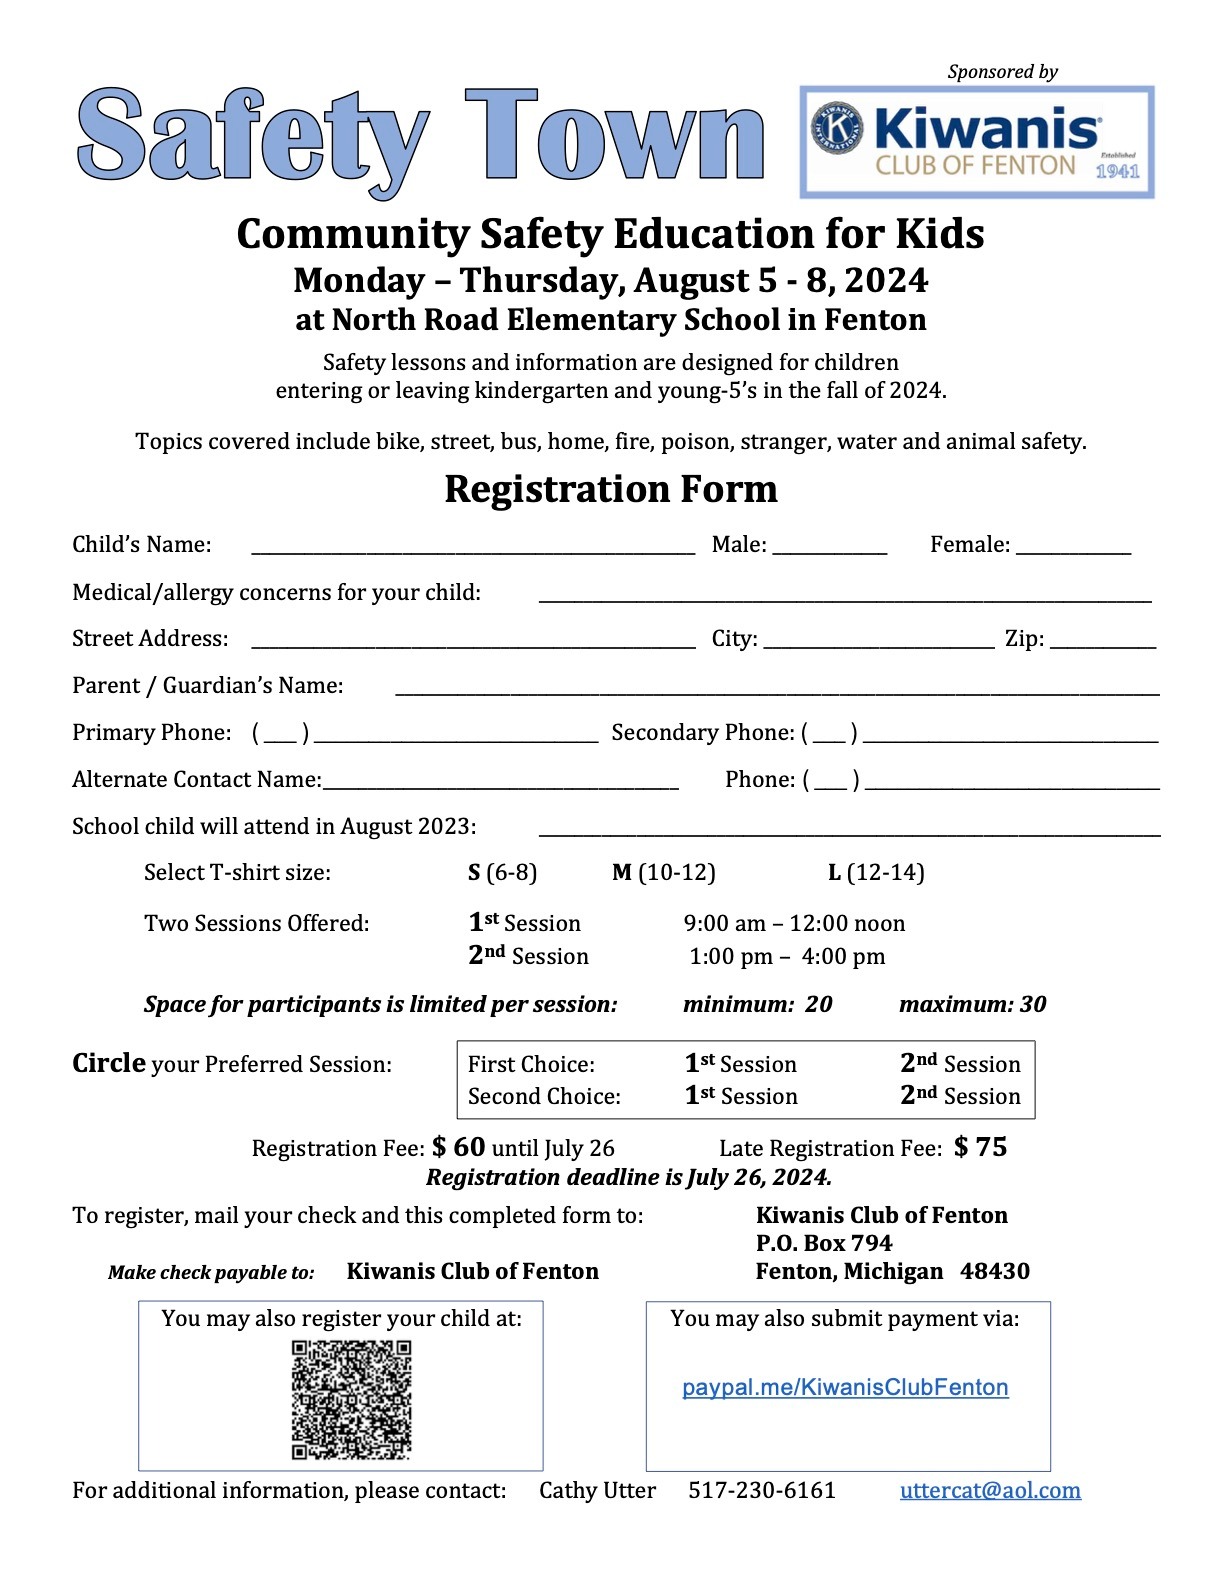 Kiwanis Safety Town Flyer